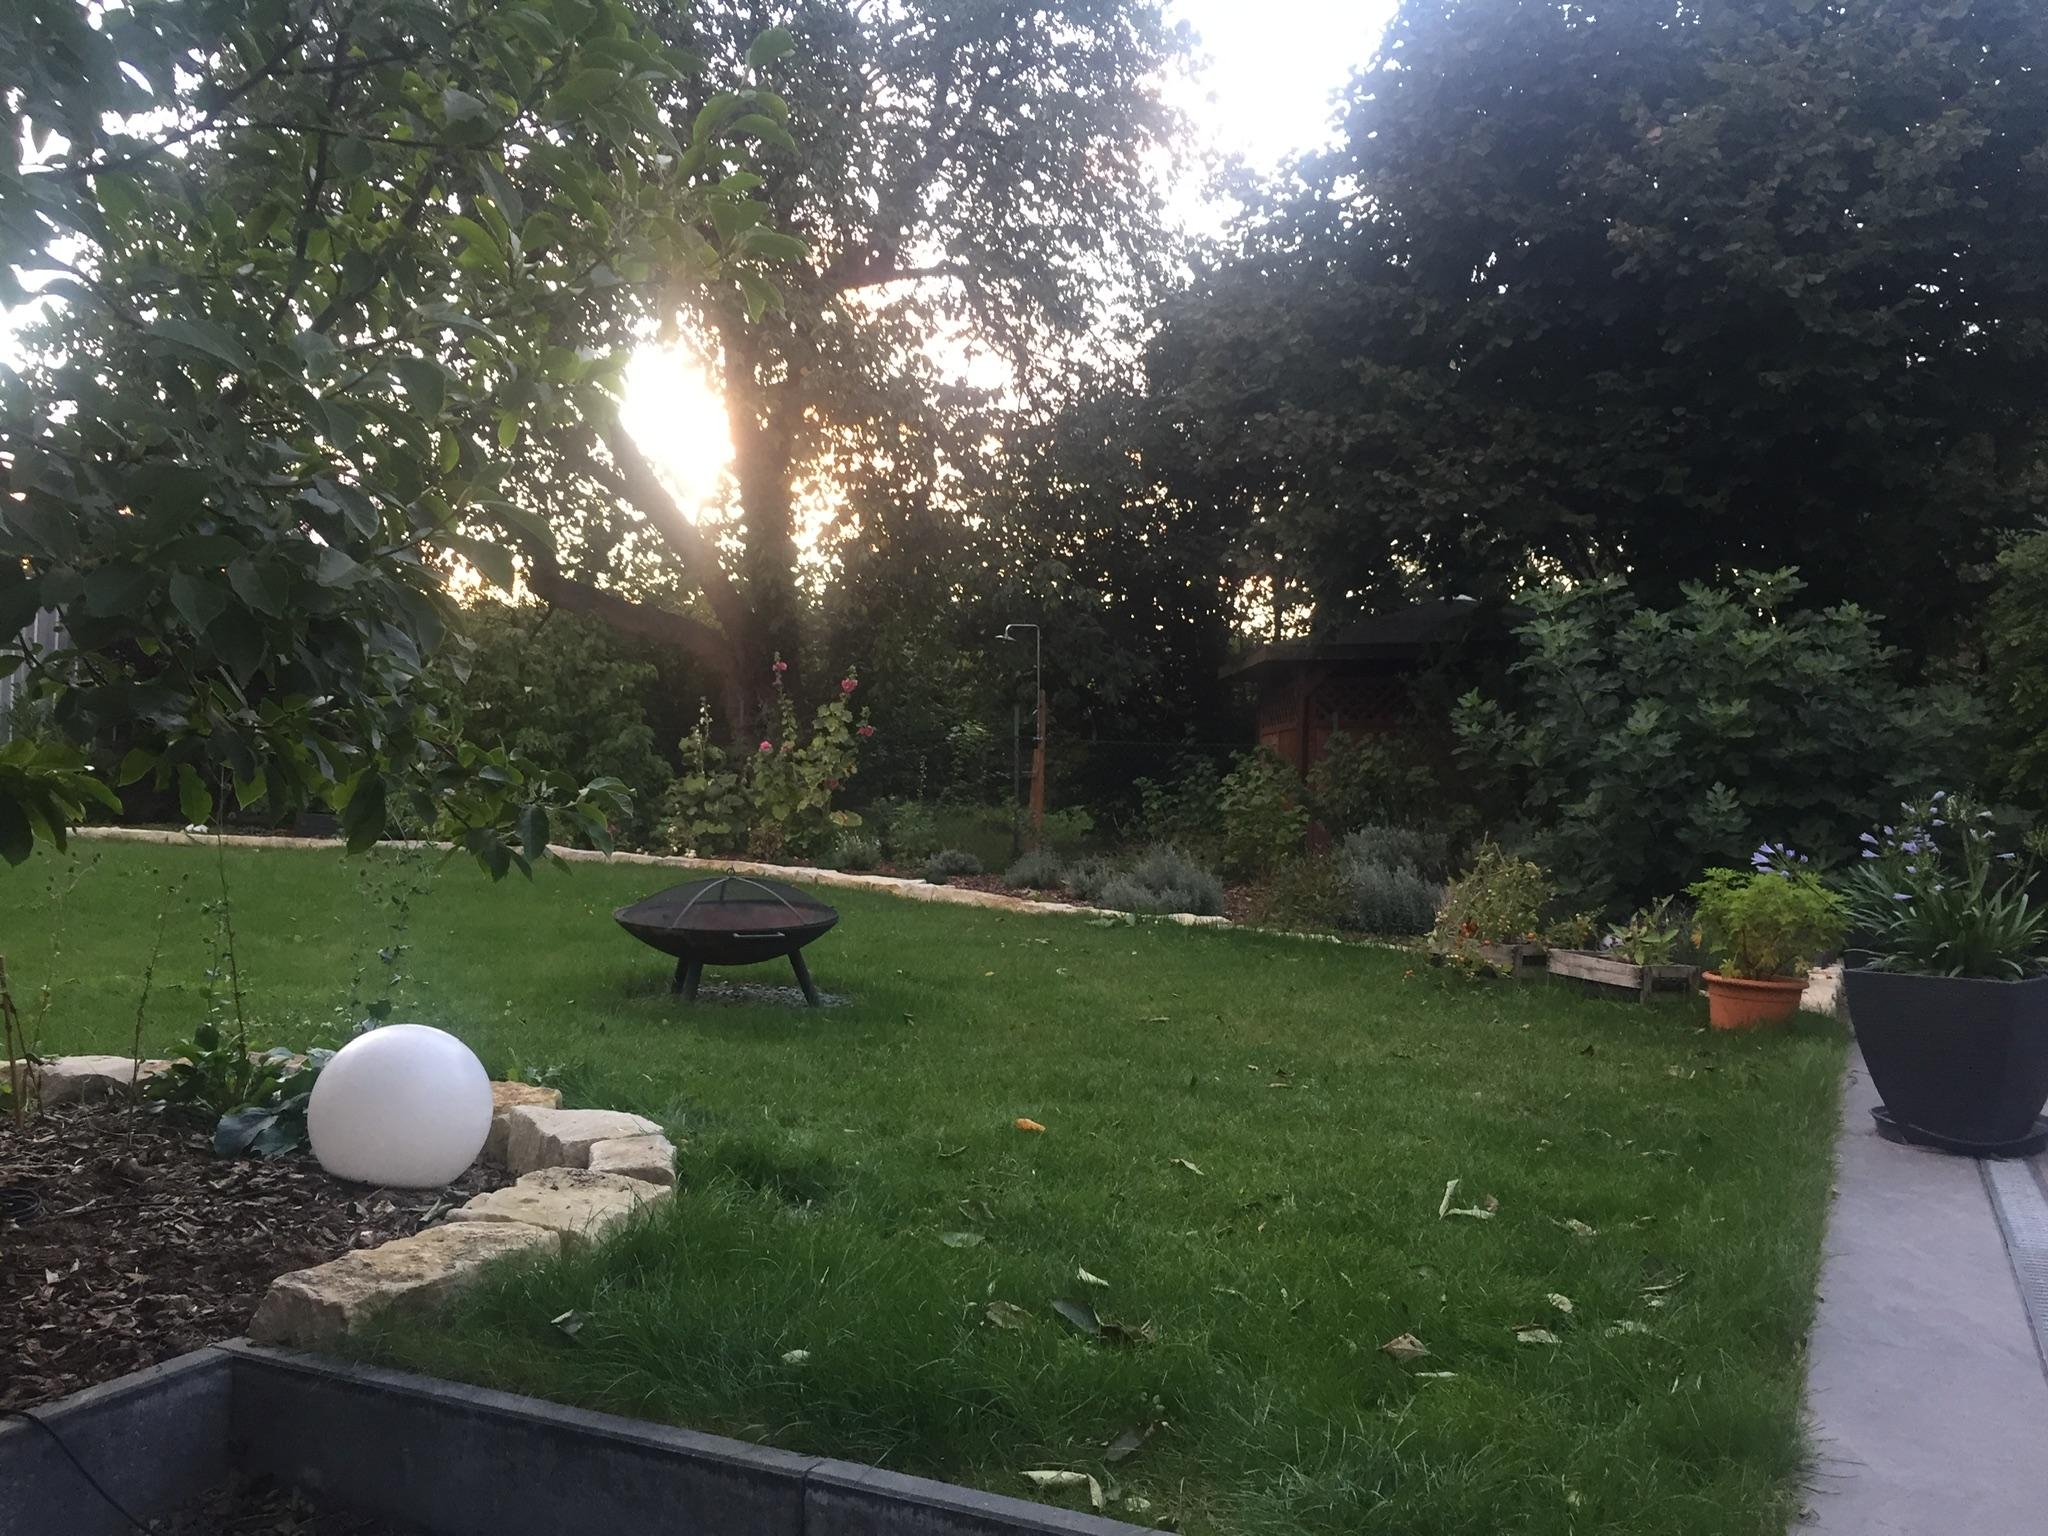 Abendruhe im Gartendsdschungel #livingchallenge #outdoor